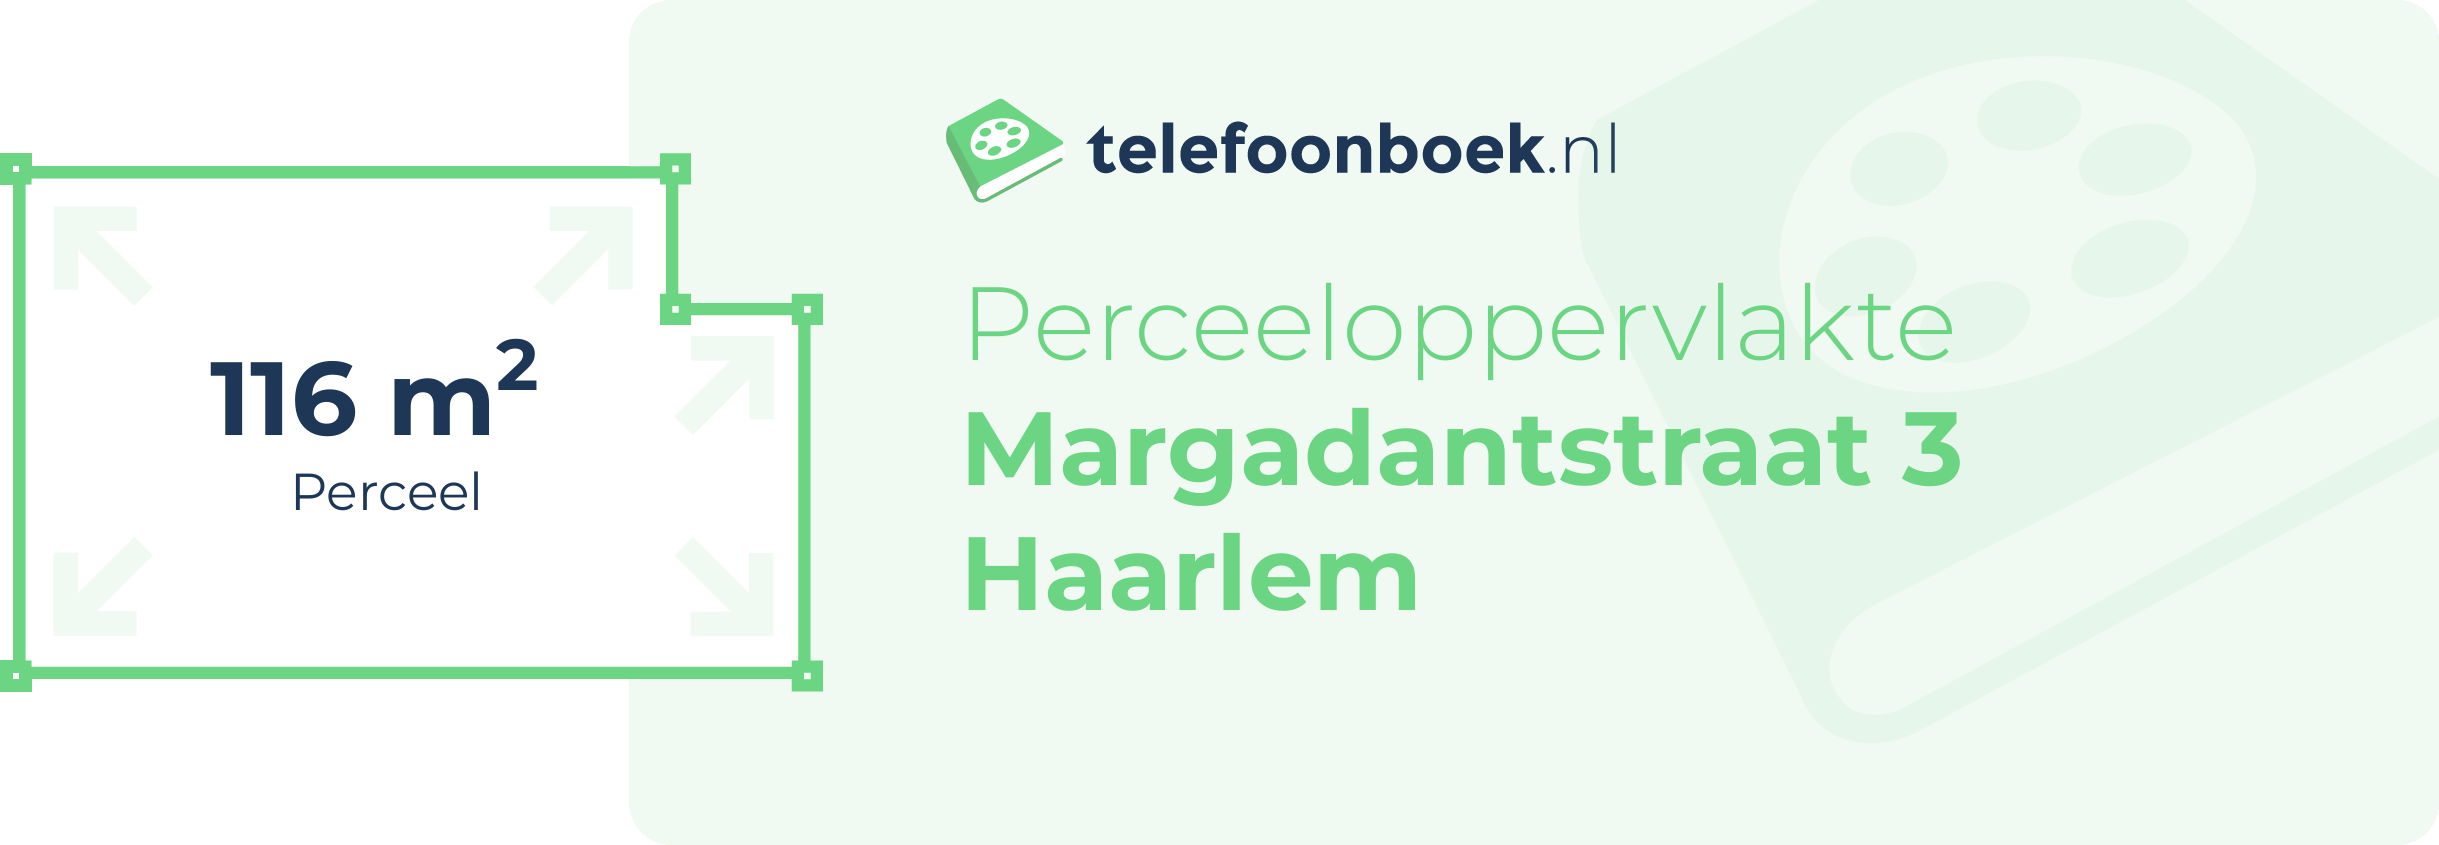 Perceeloppervlakte Margadantstraat 3 Haarlem